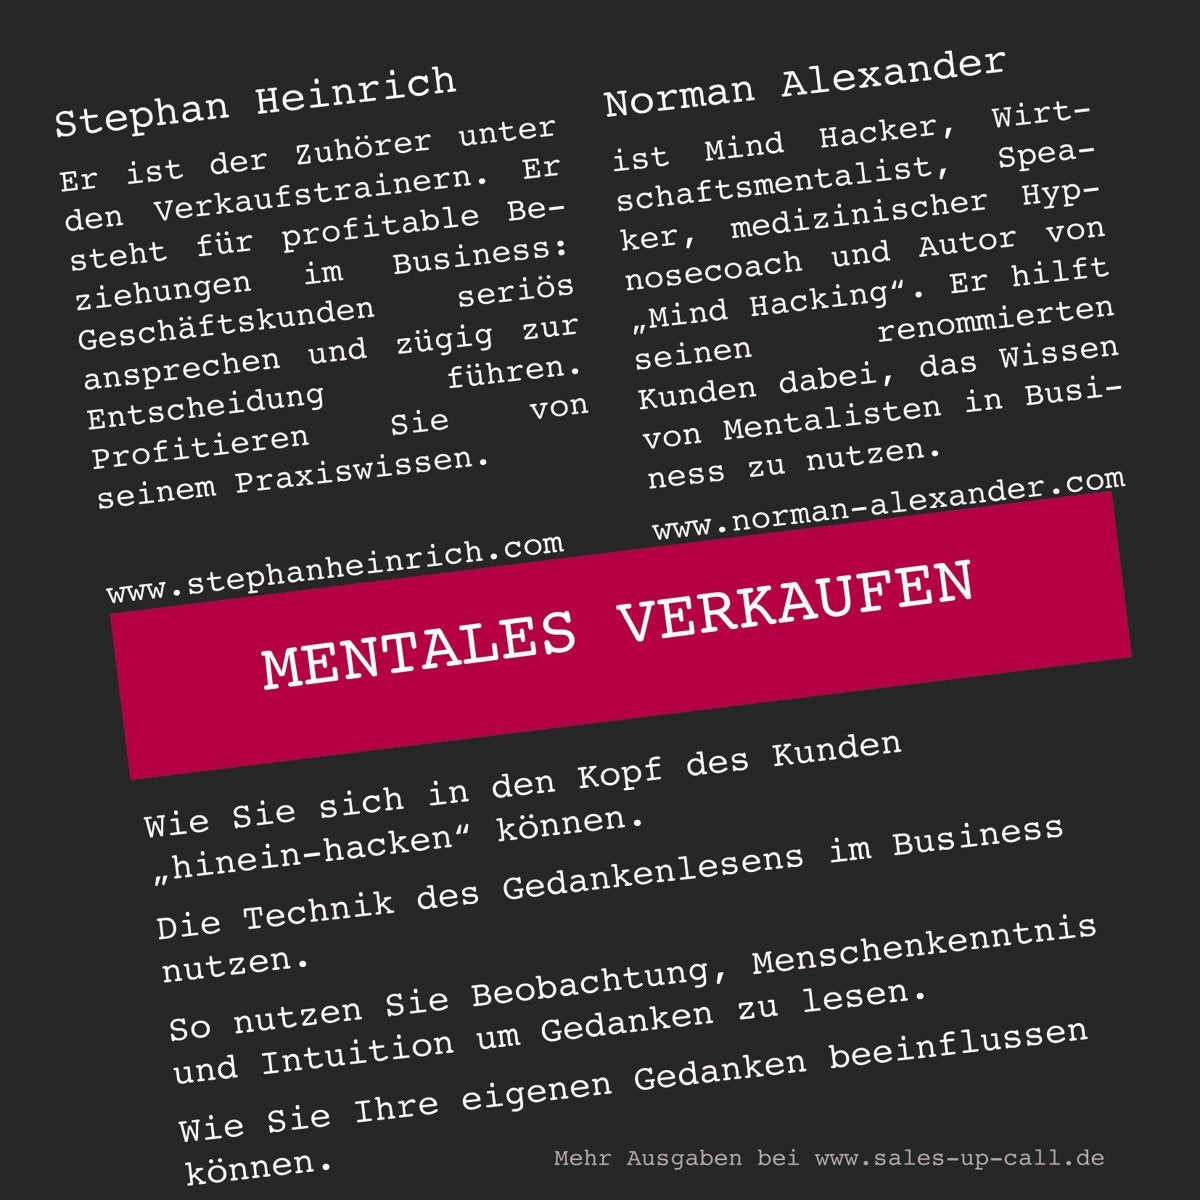 Mentales Verkaufen - Sales-up-Call - Stephan Heinrich